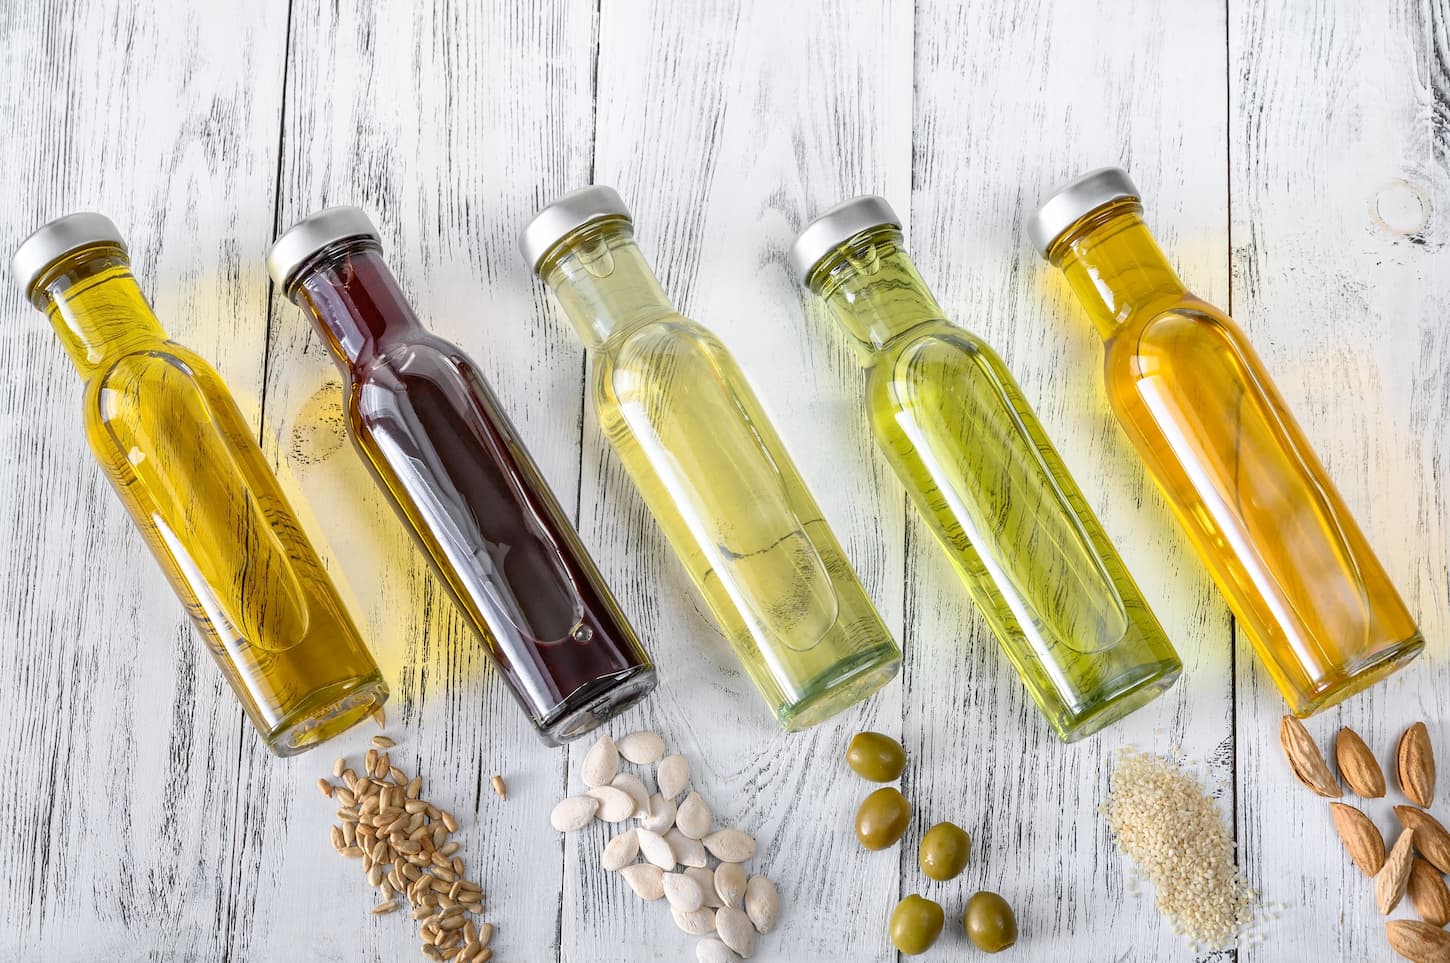 An image of vegetable oils in bottles.